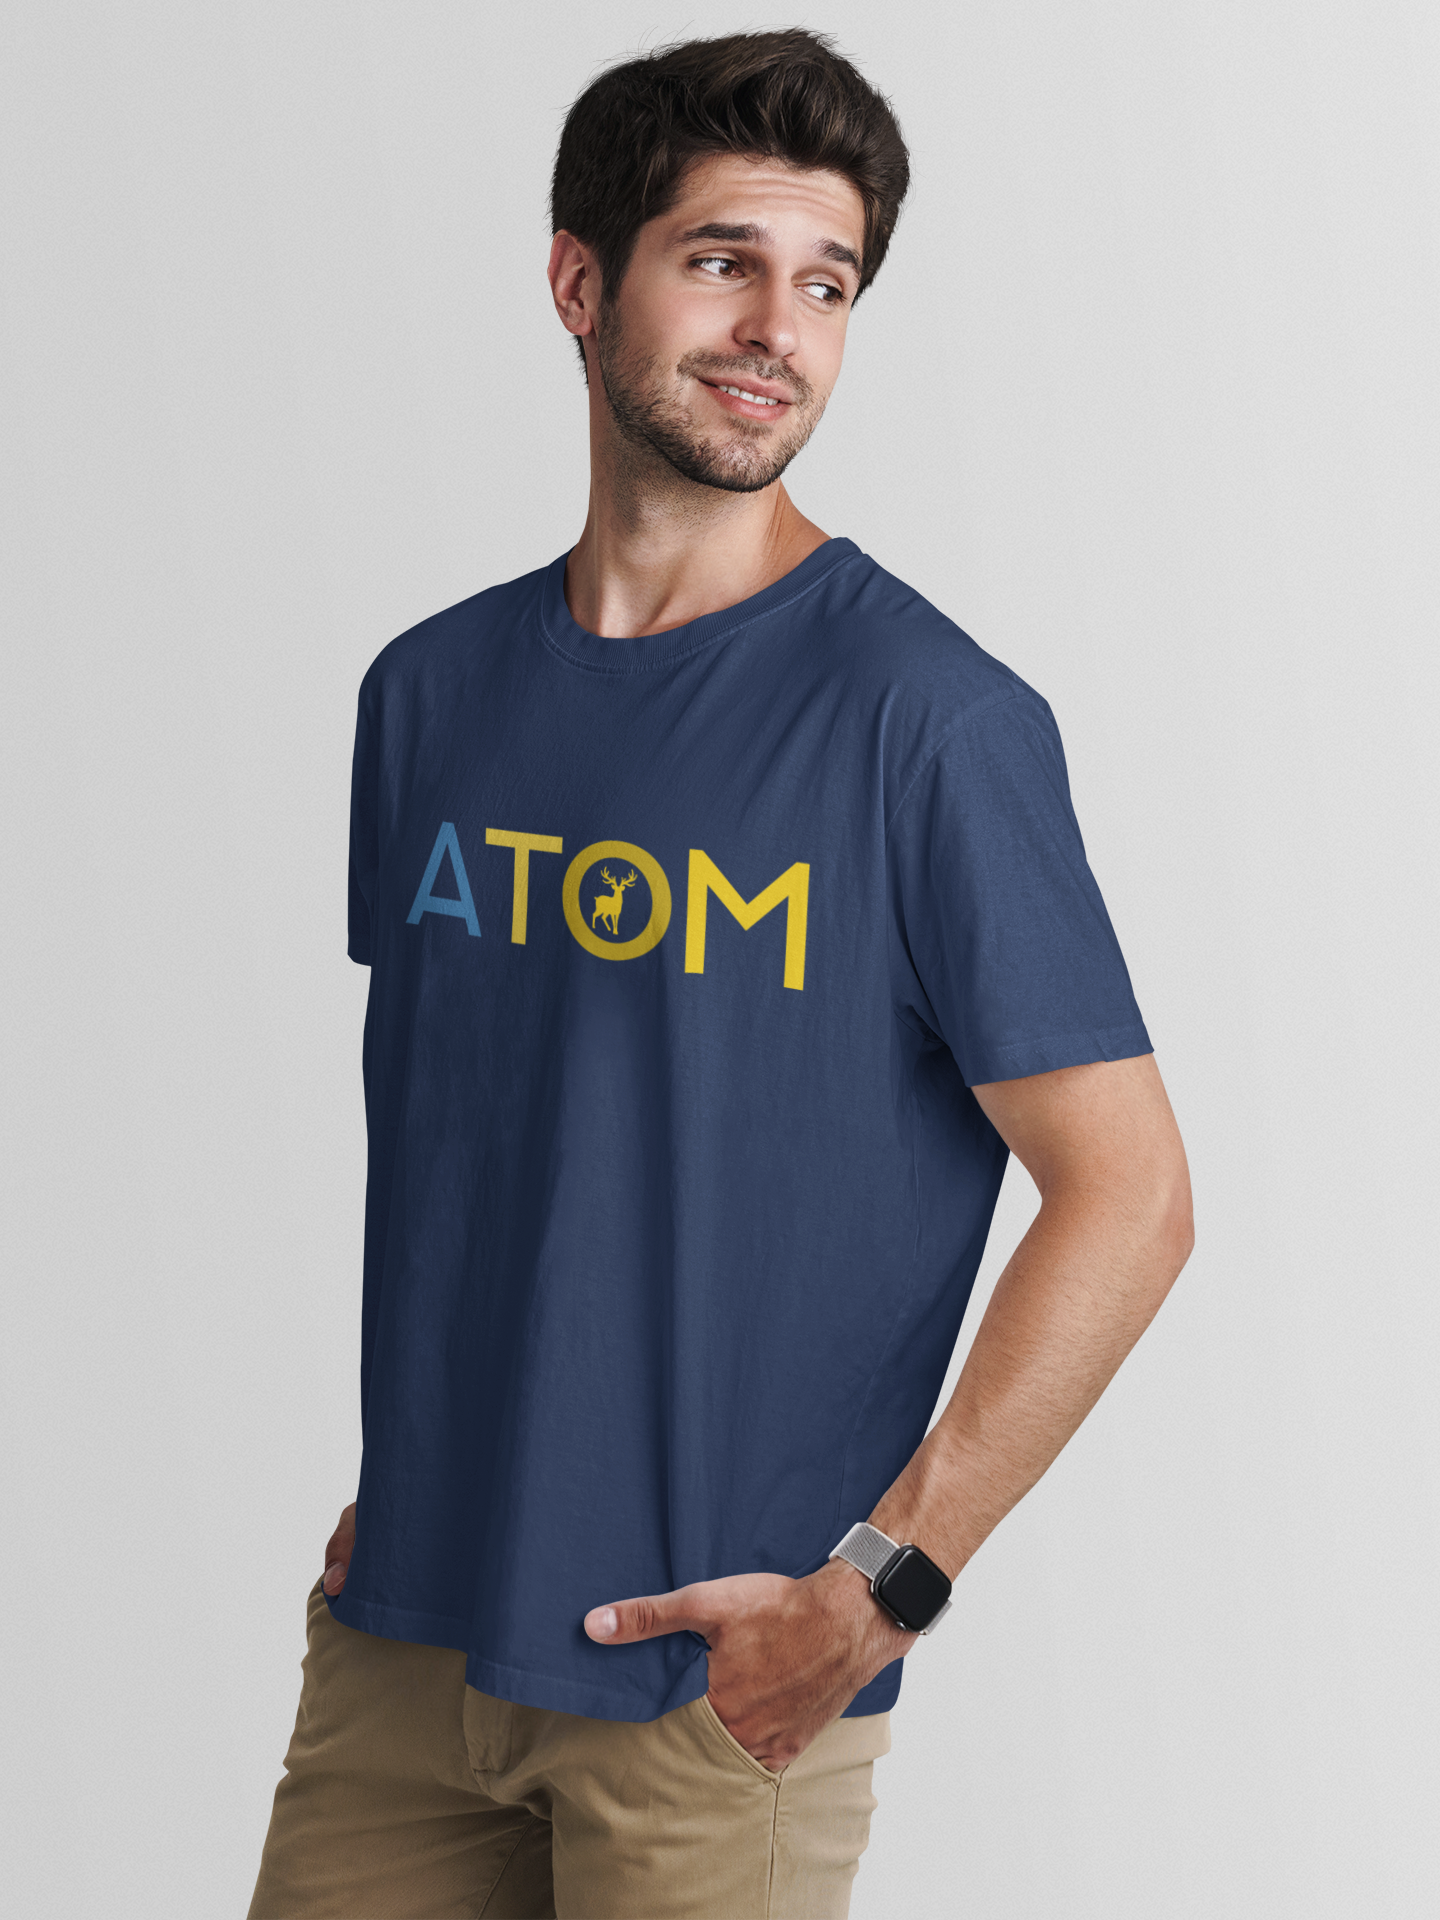 ATOM Signature Flat Yellow Icon Navy Blue Round Neck T-Shirt for Men.